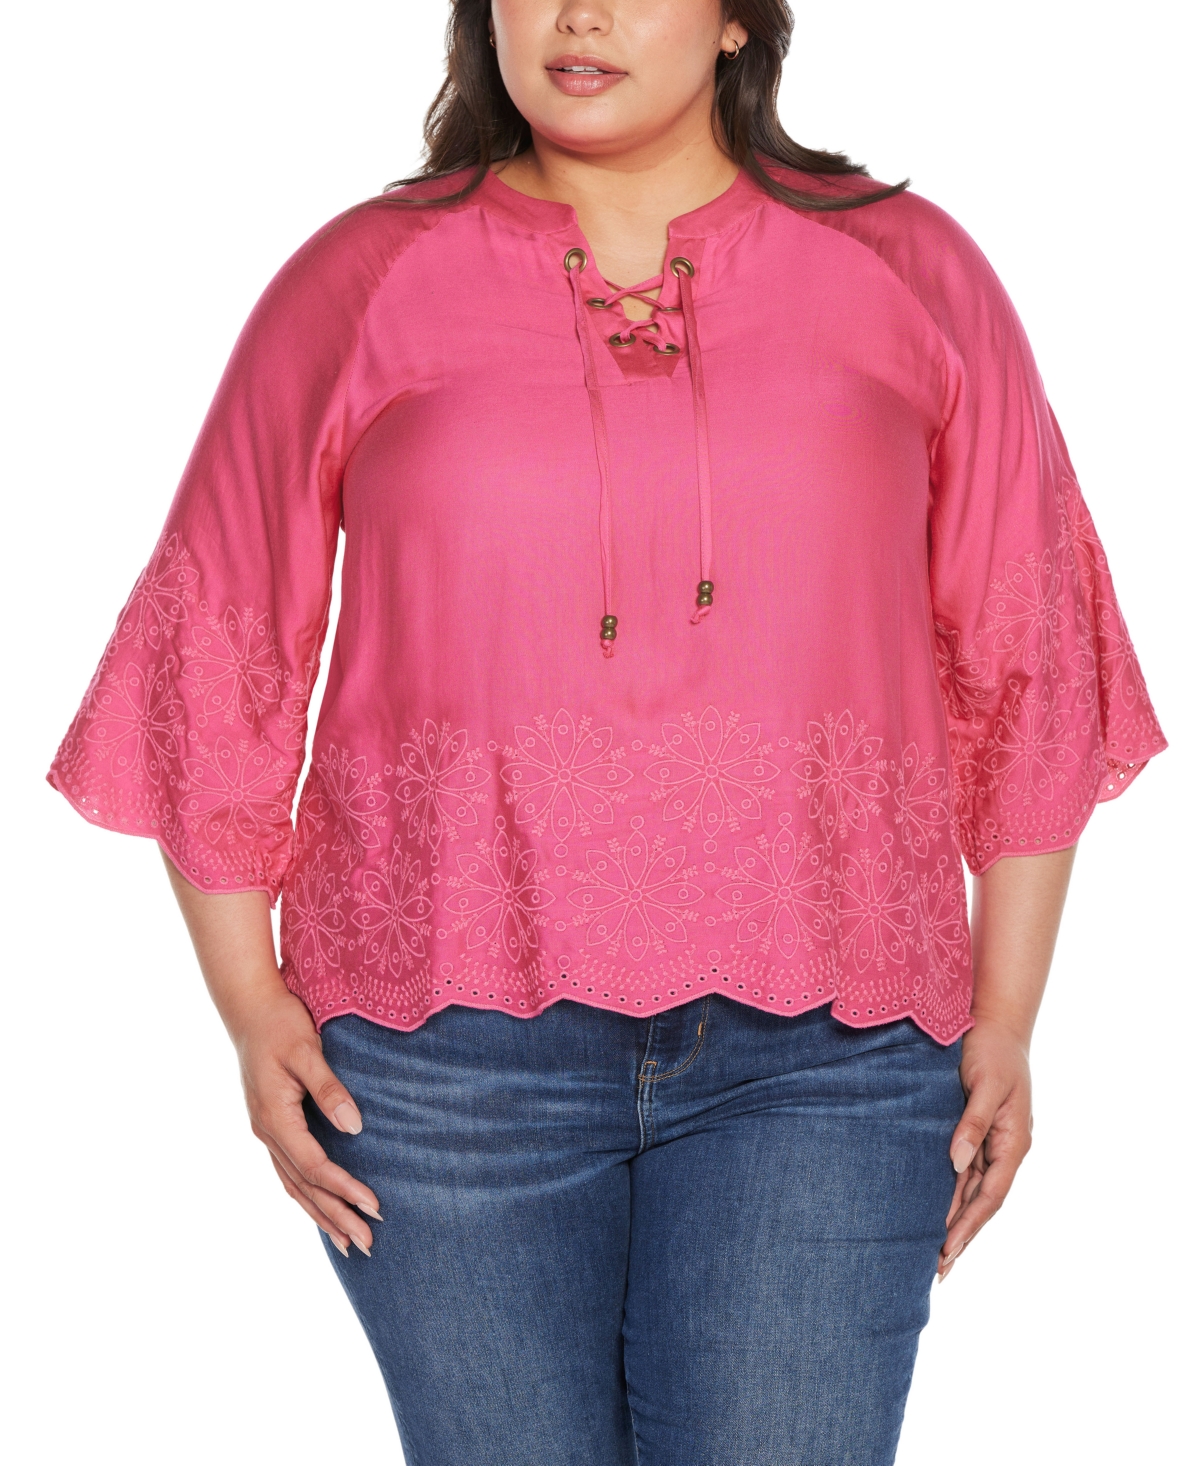 Black Label Plus Size Raglan 3/4-Sleeve Embroidered Top - Petal Pink